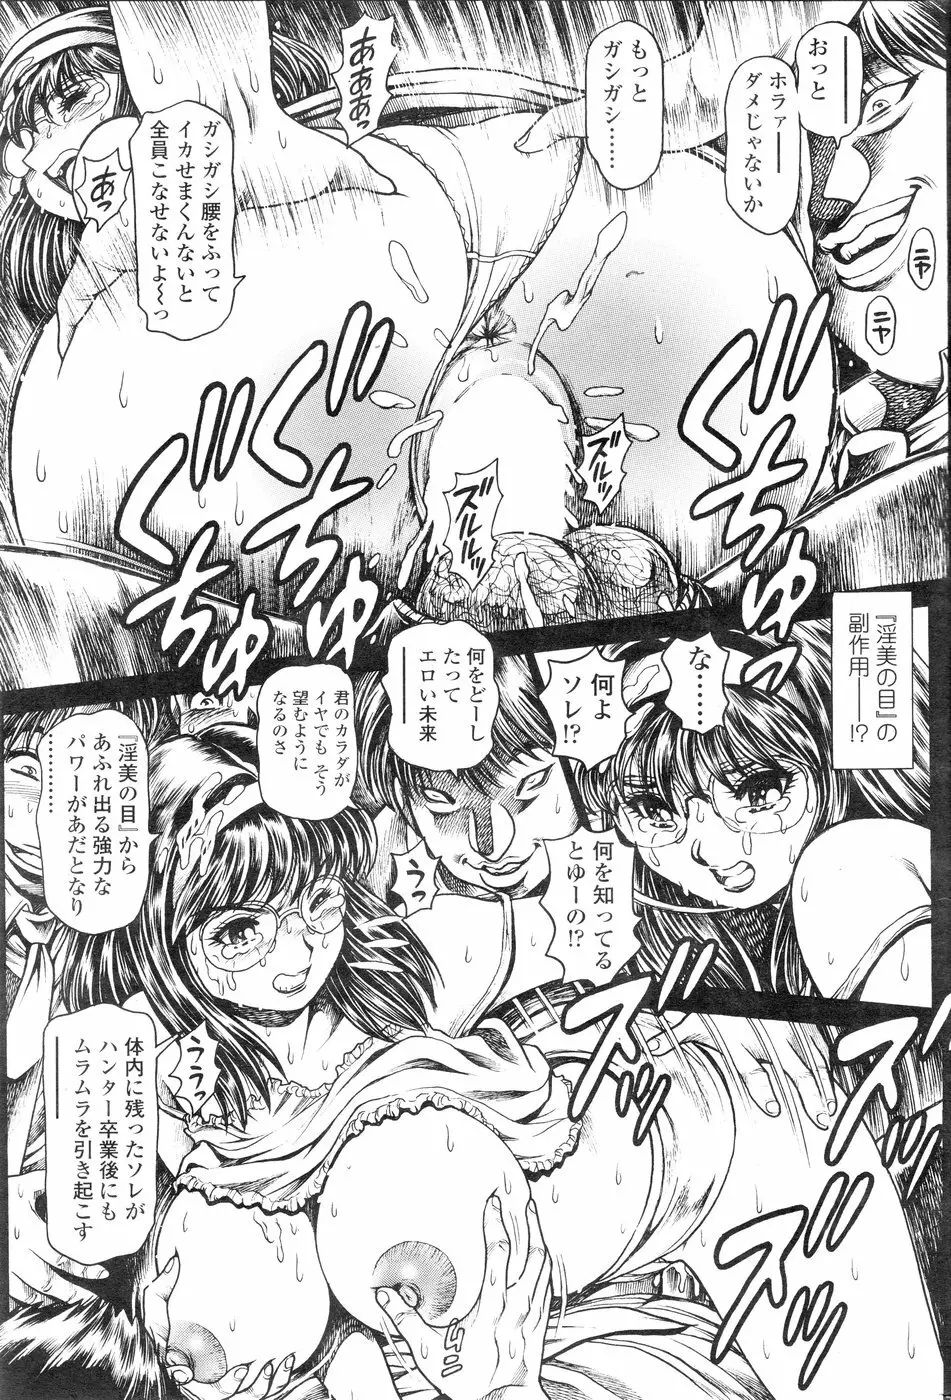 [Chataro] Nami SOS! 5 Girls – Before – Keiko 004-006 [JAP].cbr 24ページ